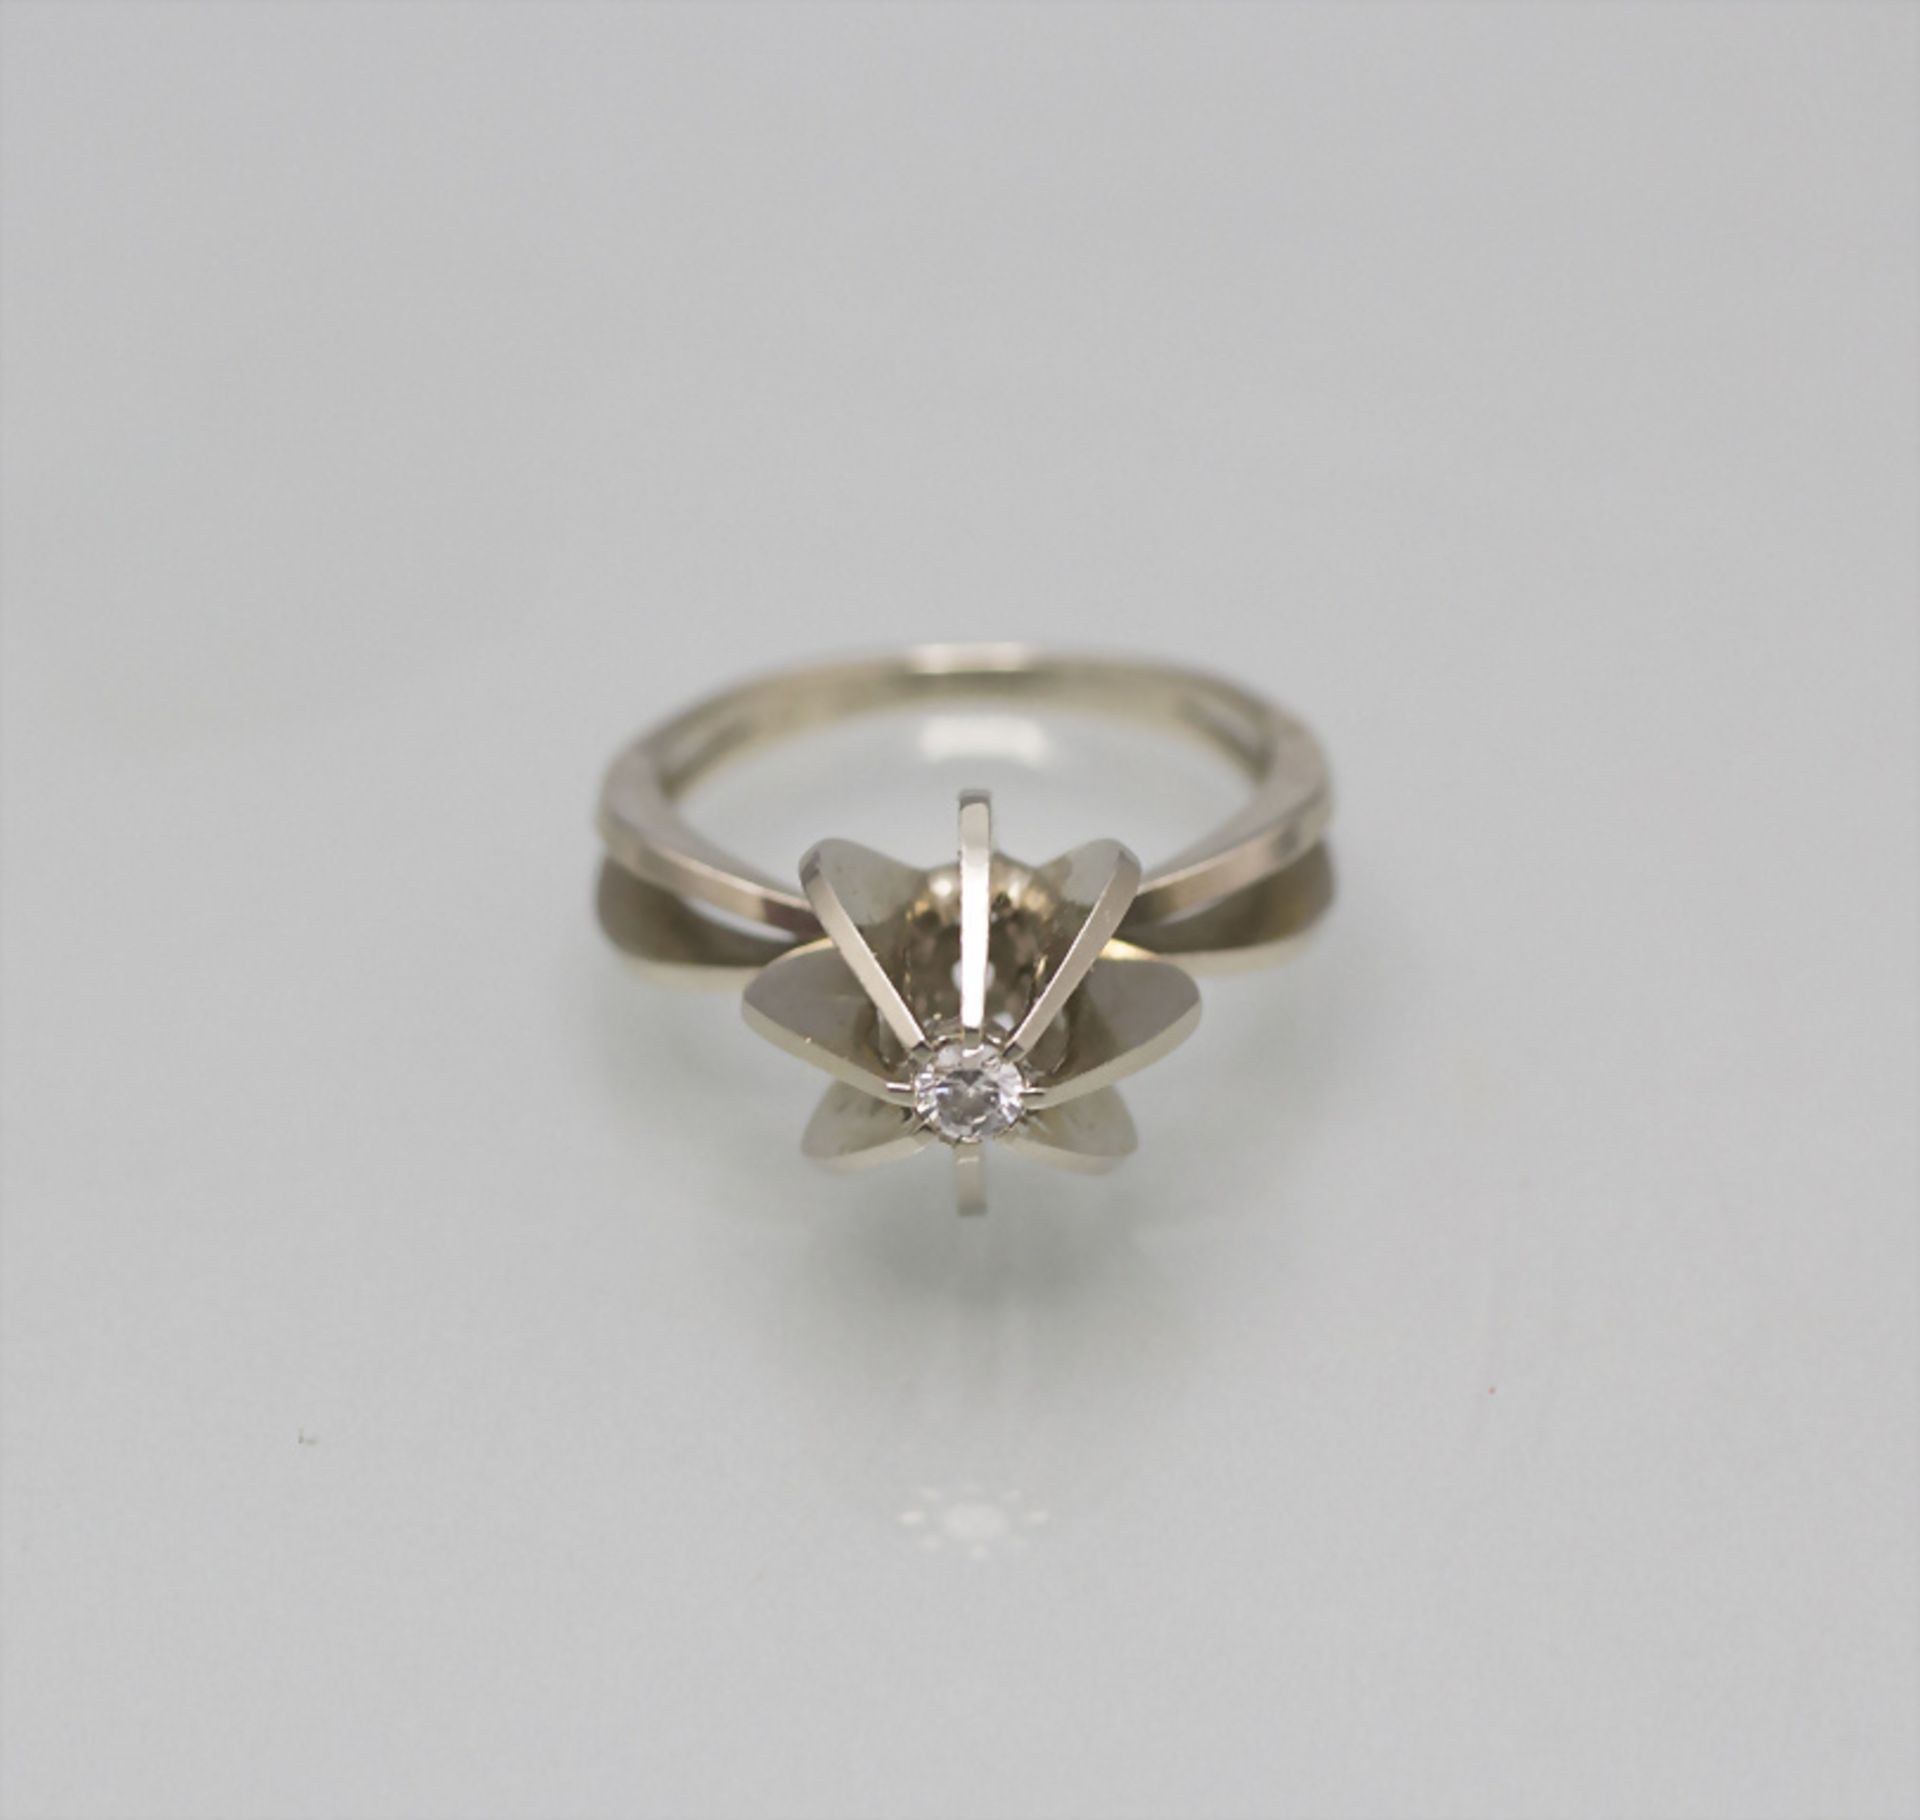 Damenring mit Brillant / A ladies 18 ct gold ring with diamond